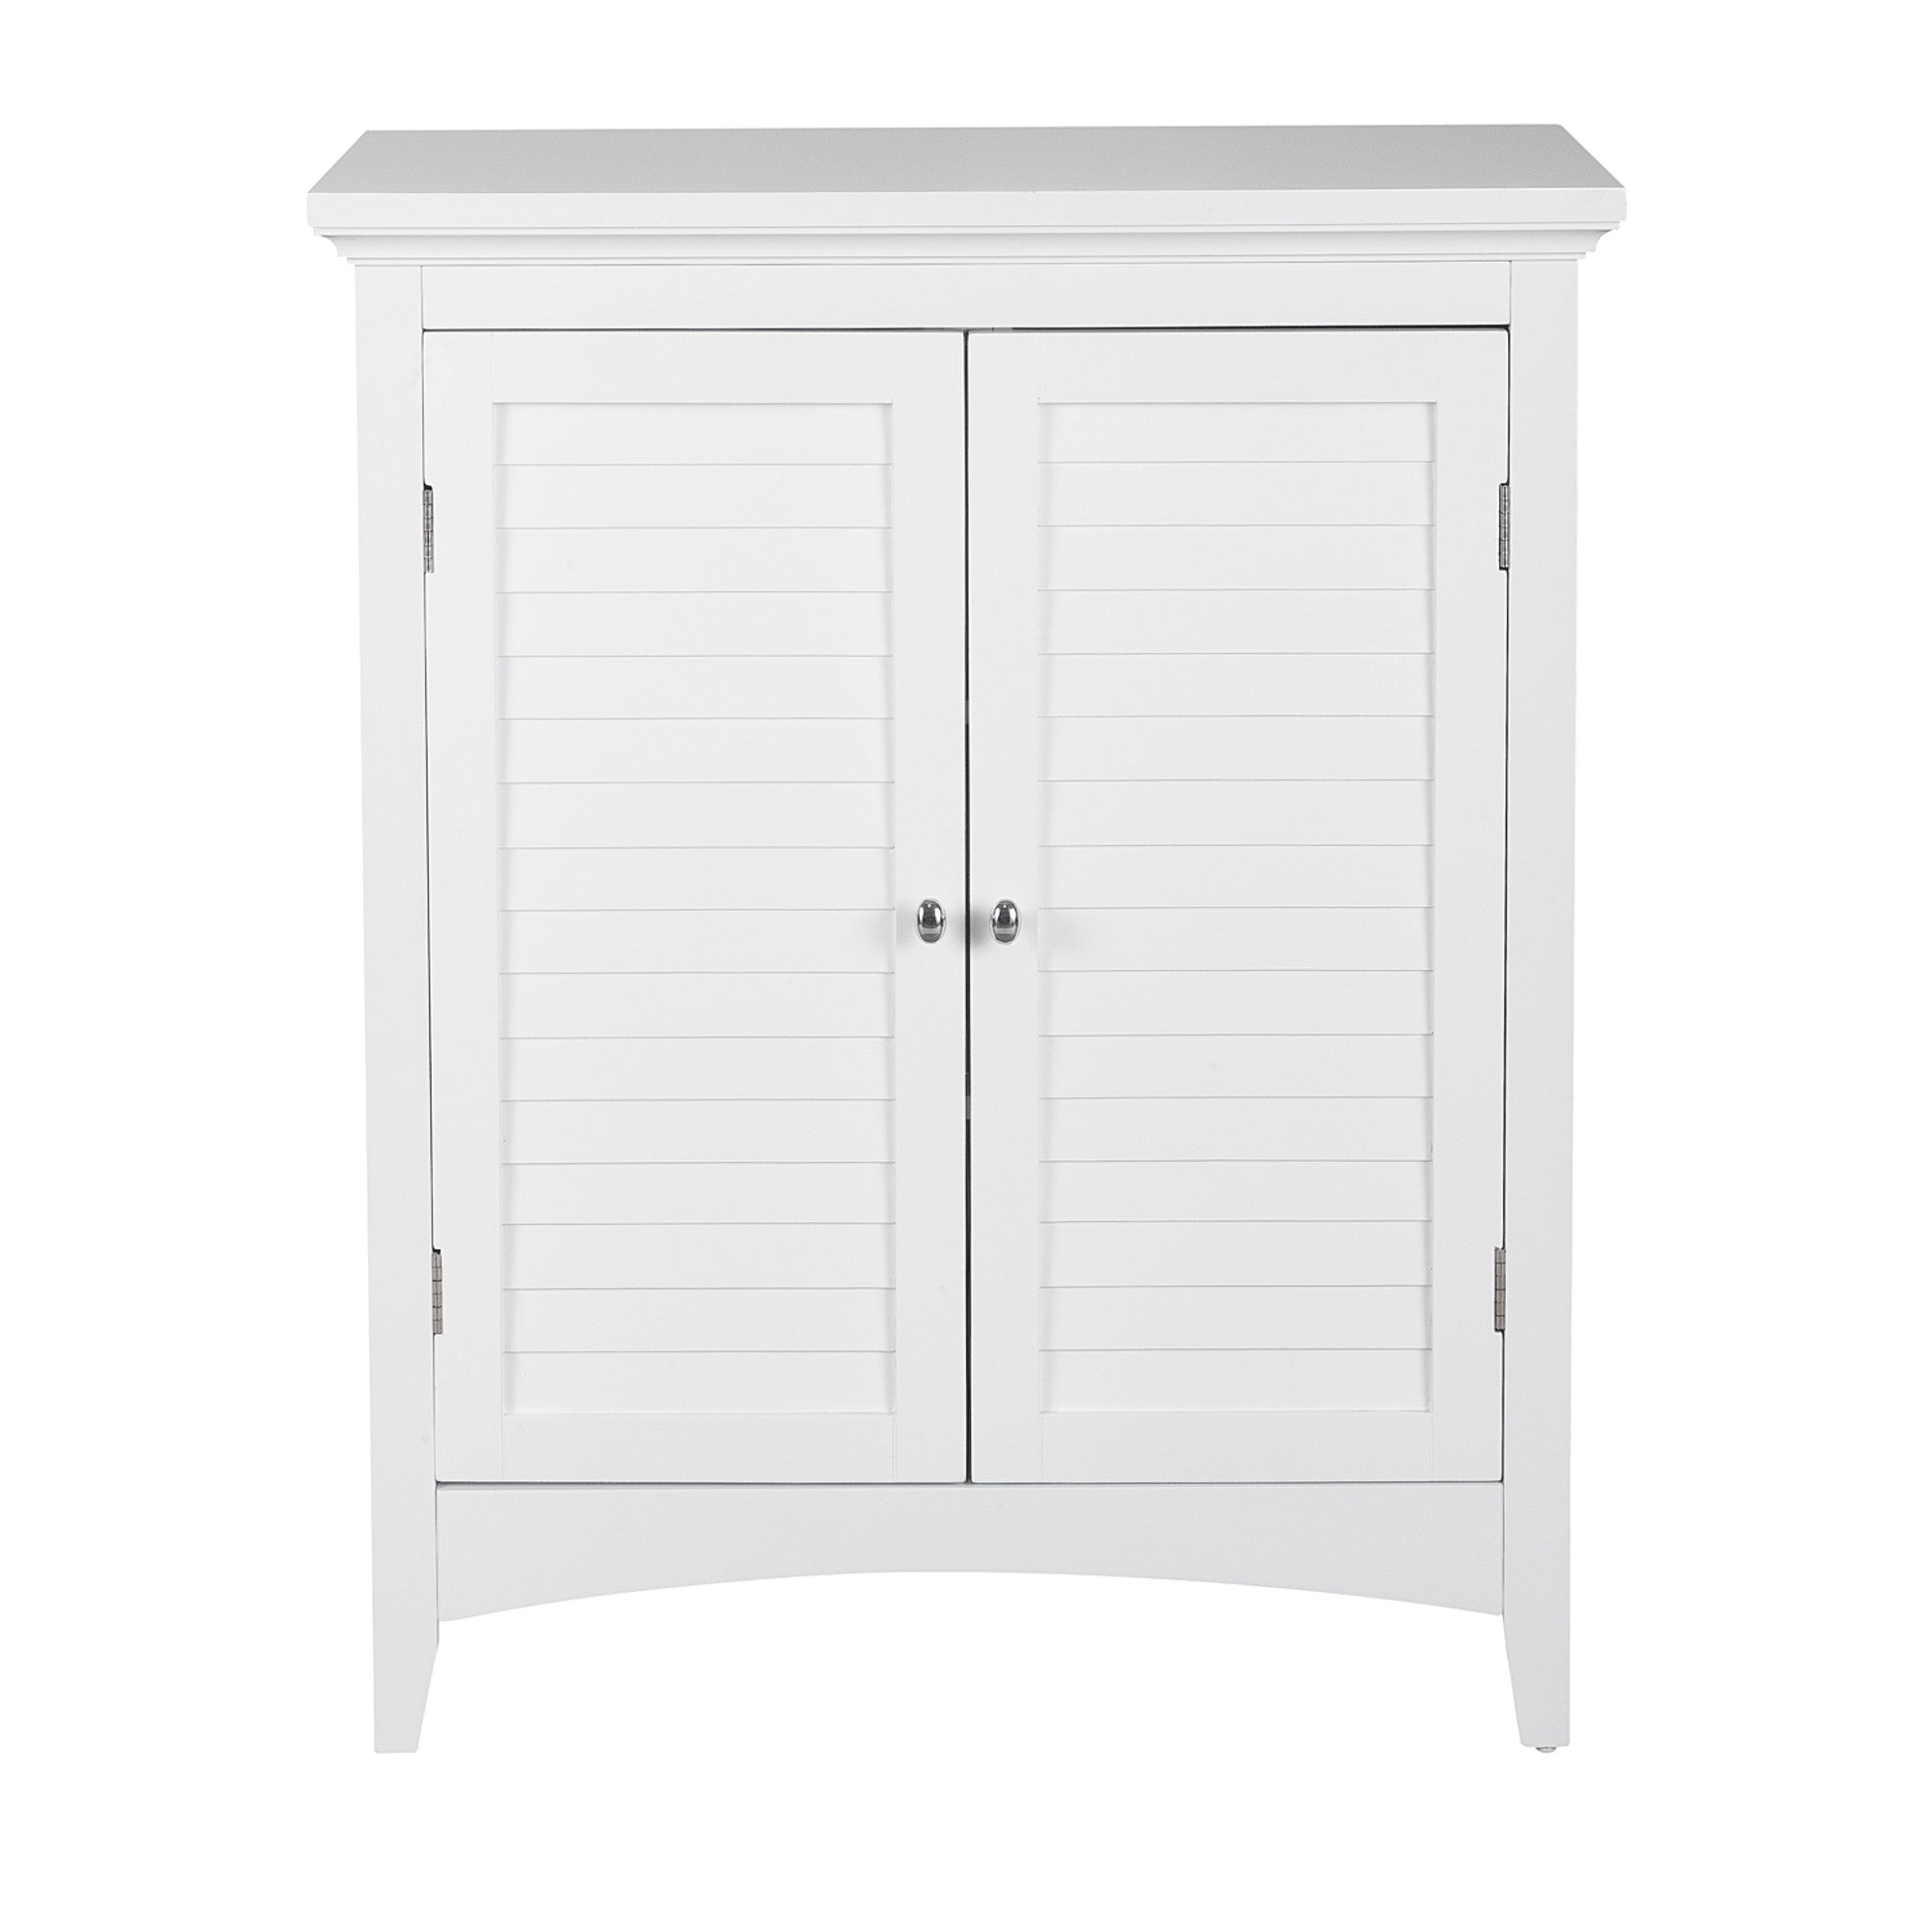 Teamson Home Glancy Wooden Floor Cabinet with Shutter Doors, White